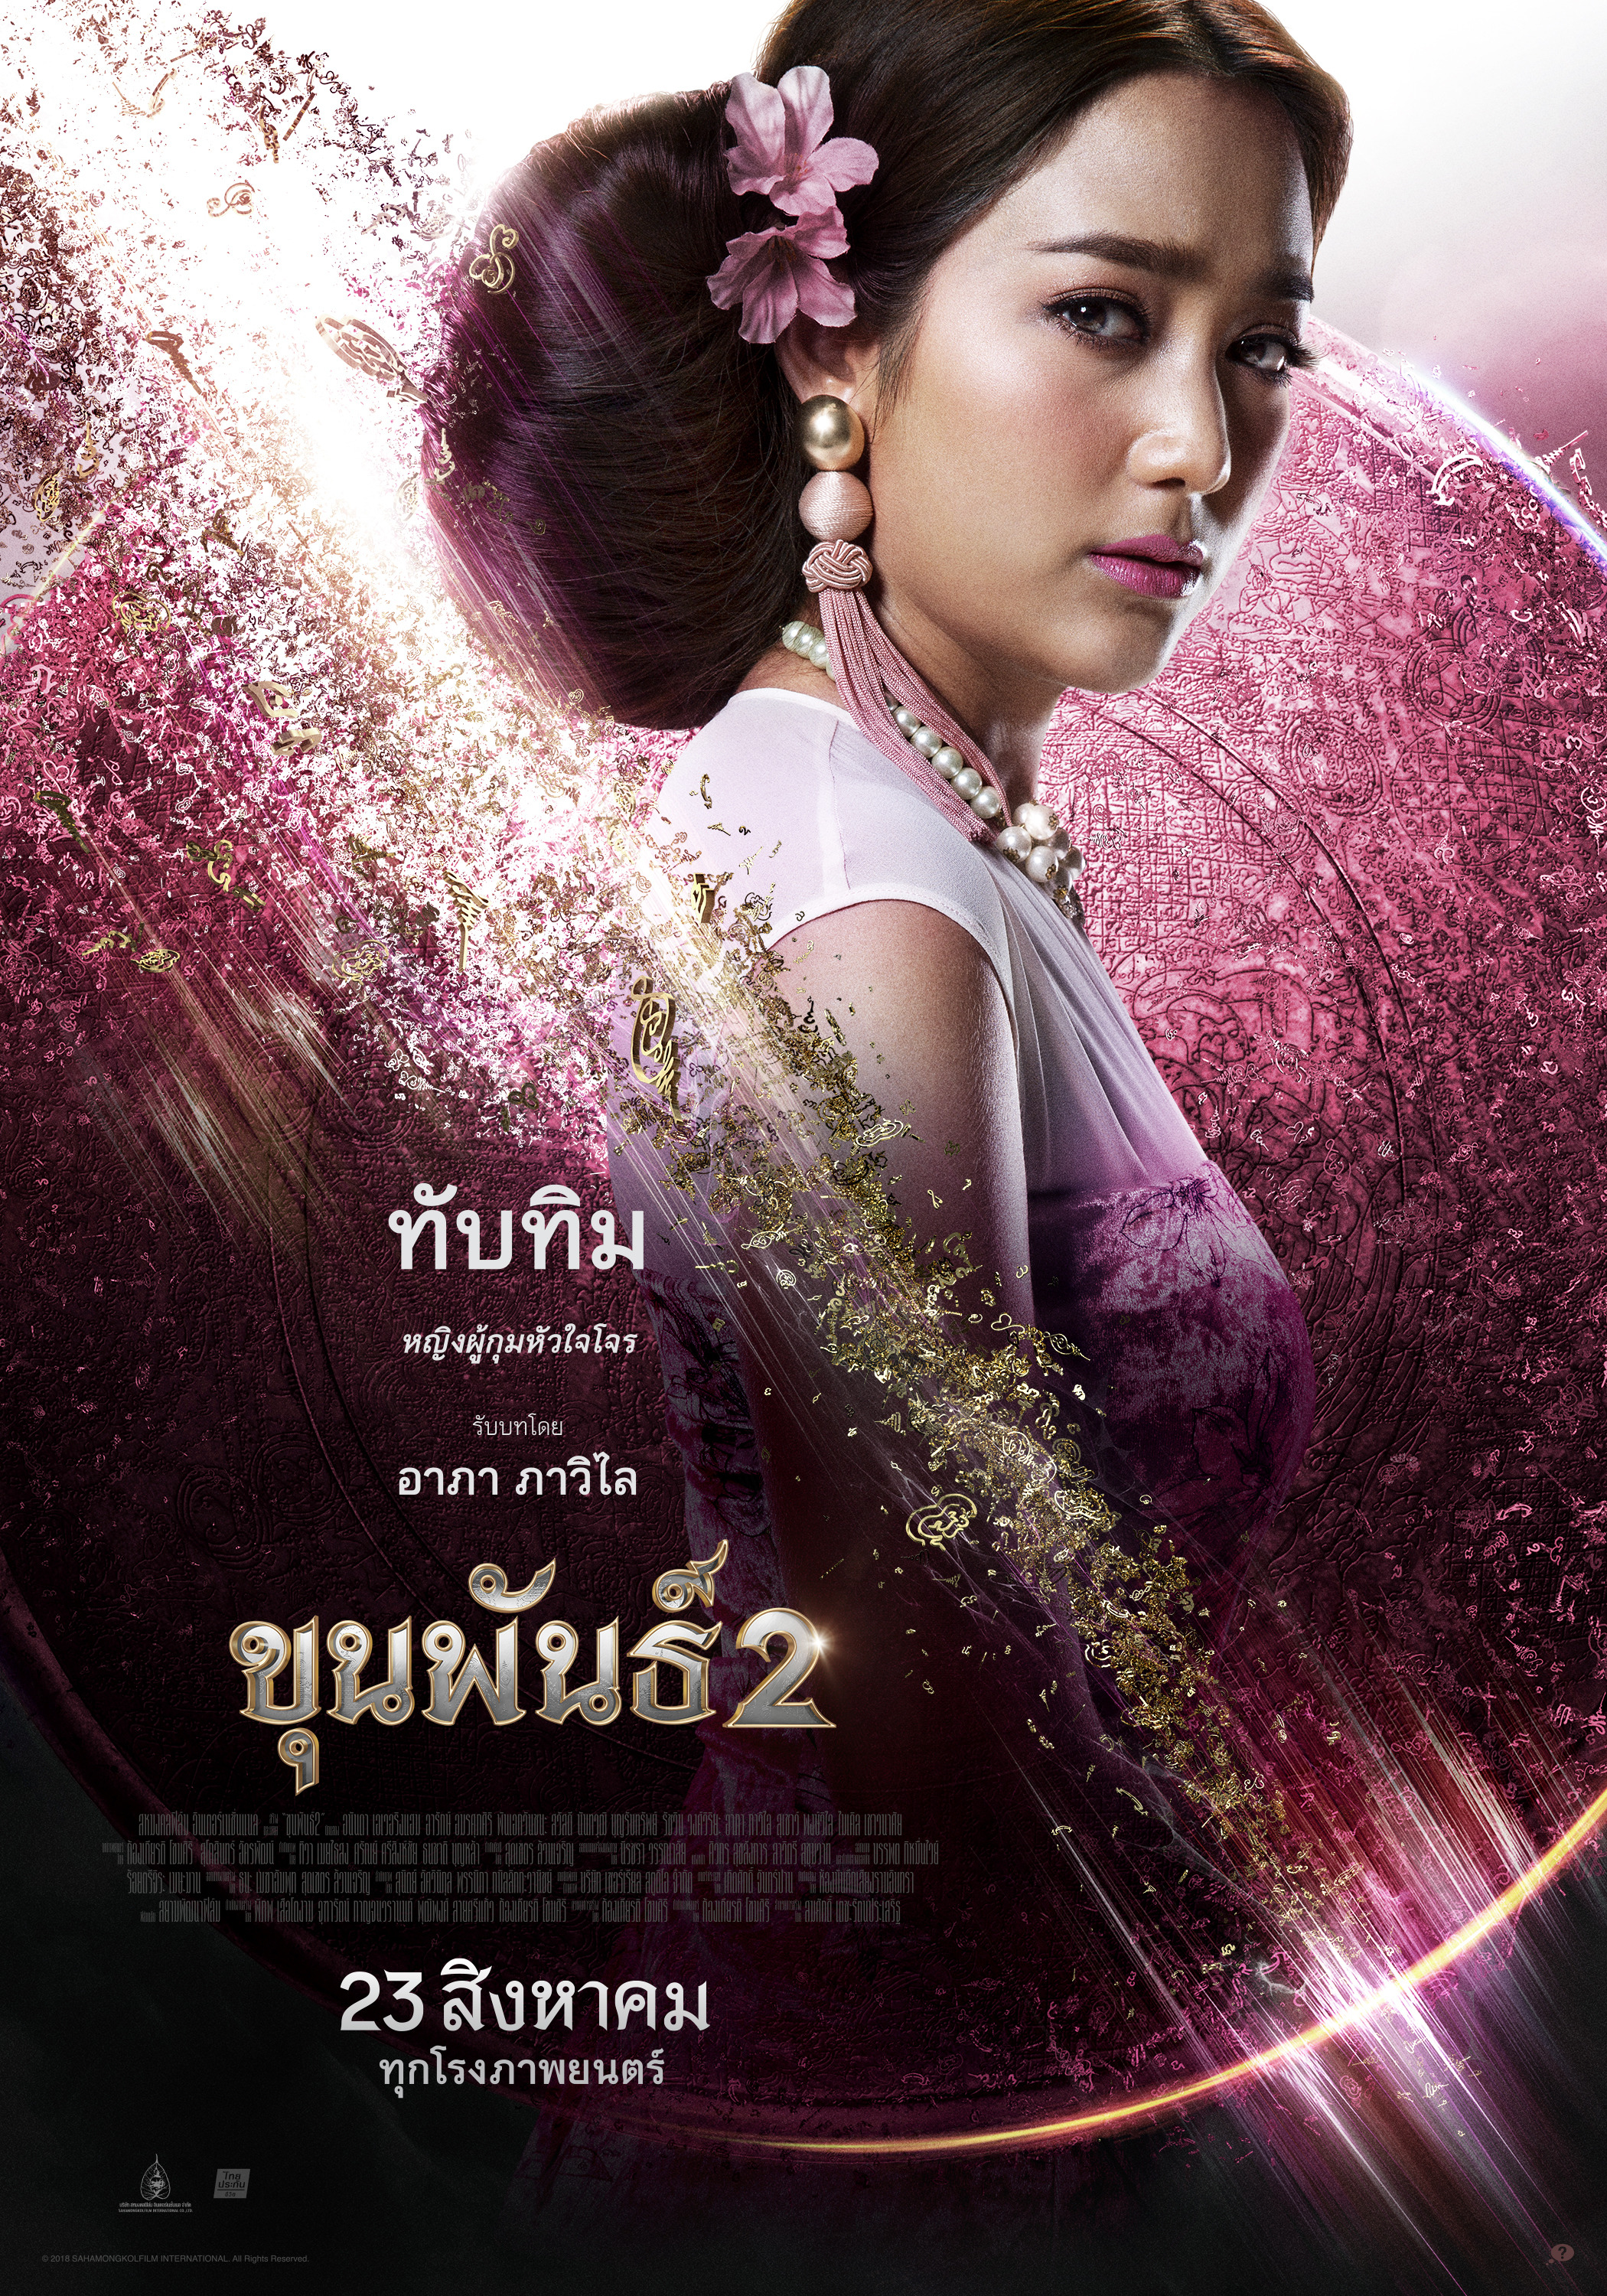 Mega Sized Movie Poster Image for Khun Phan 2 (#8 of 8)